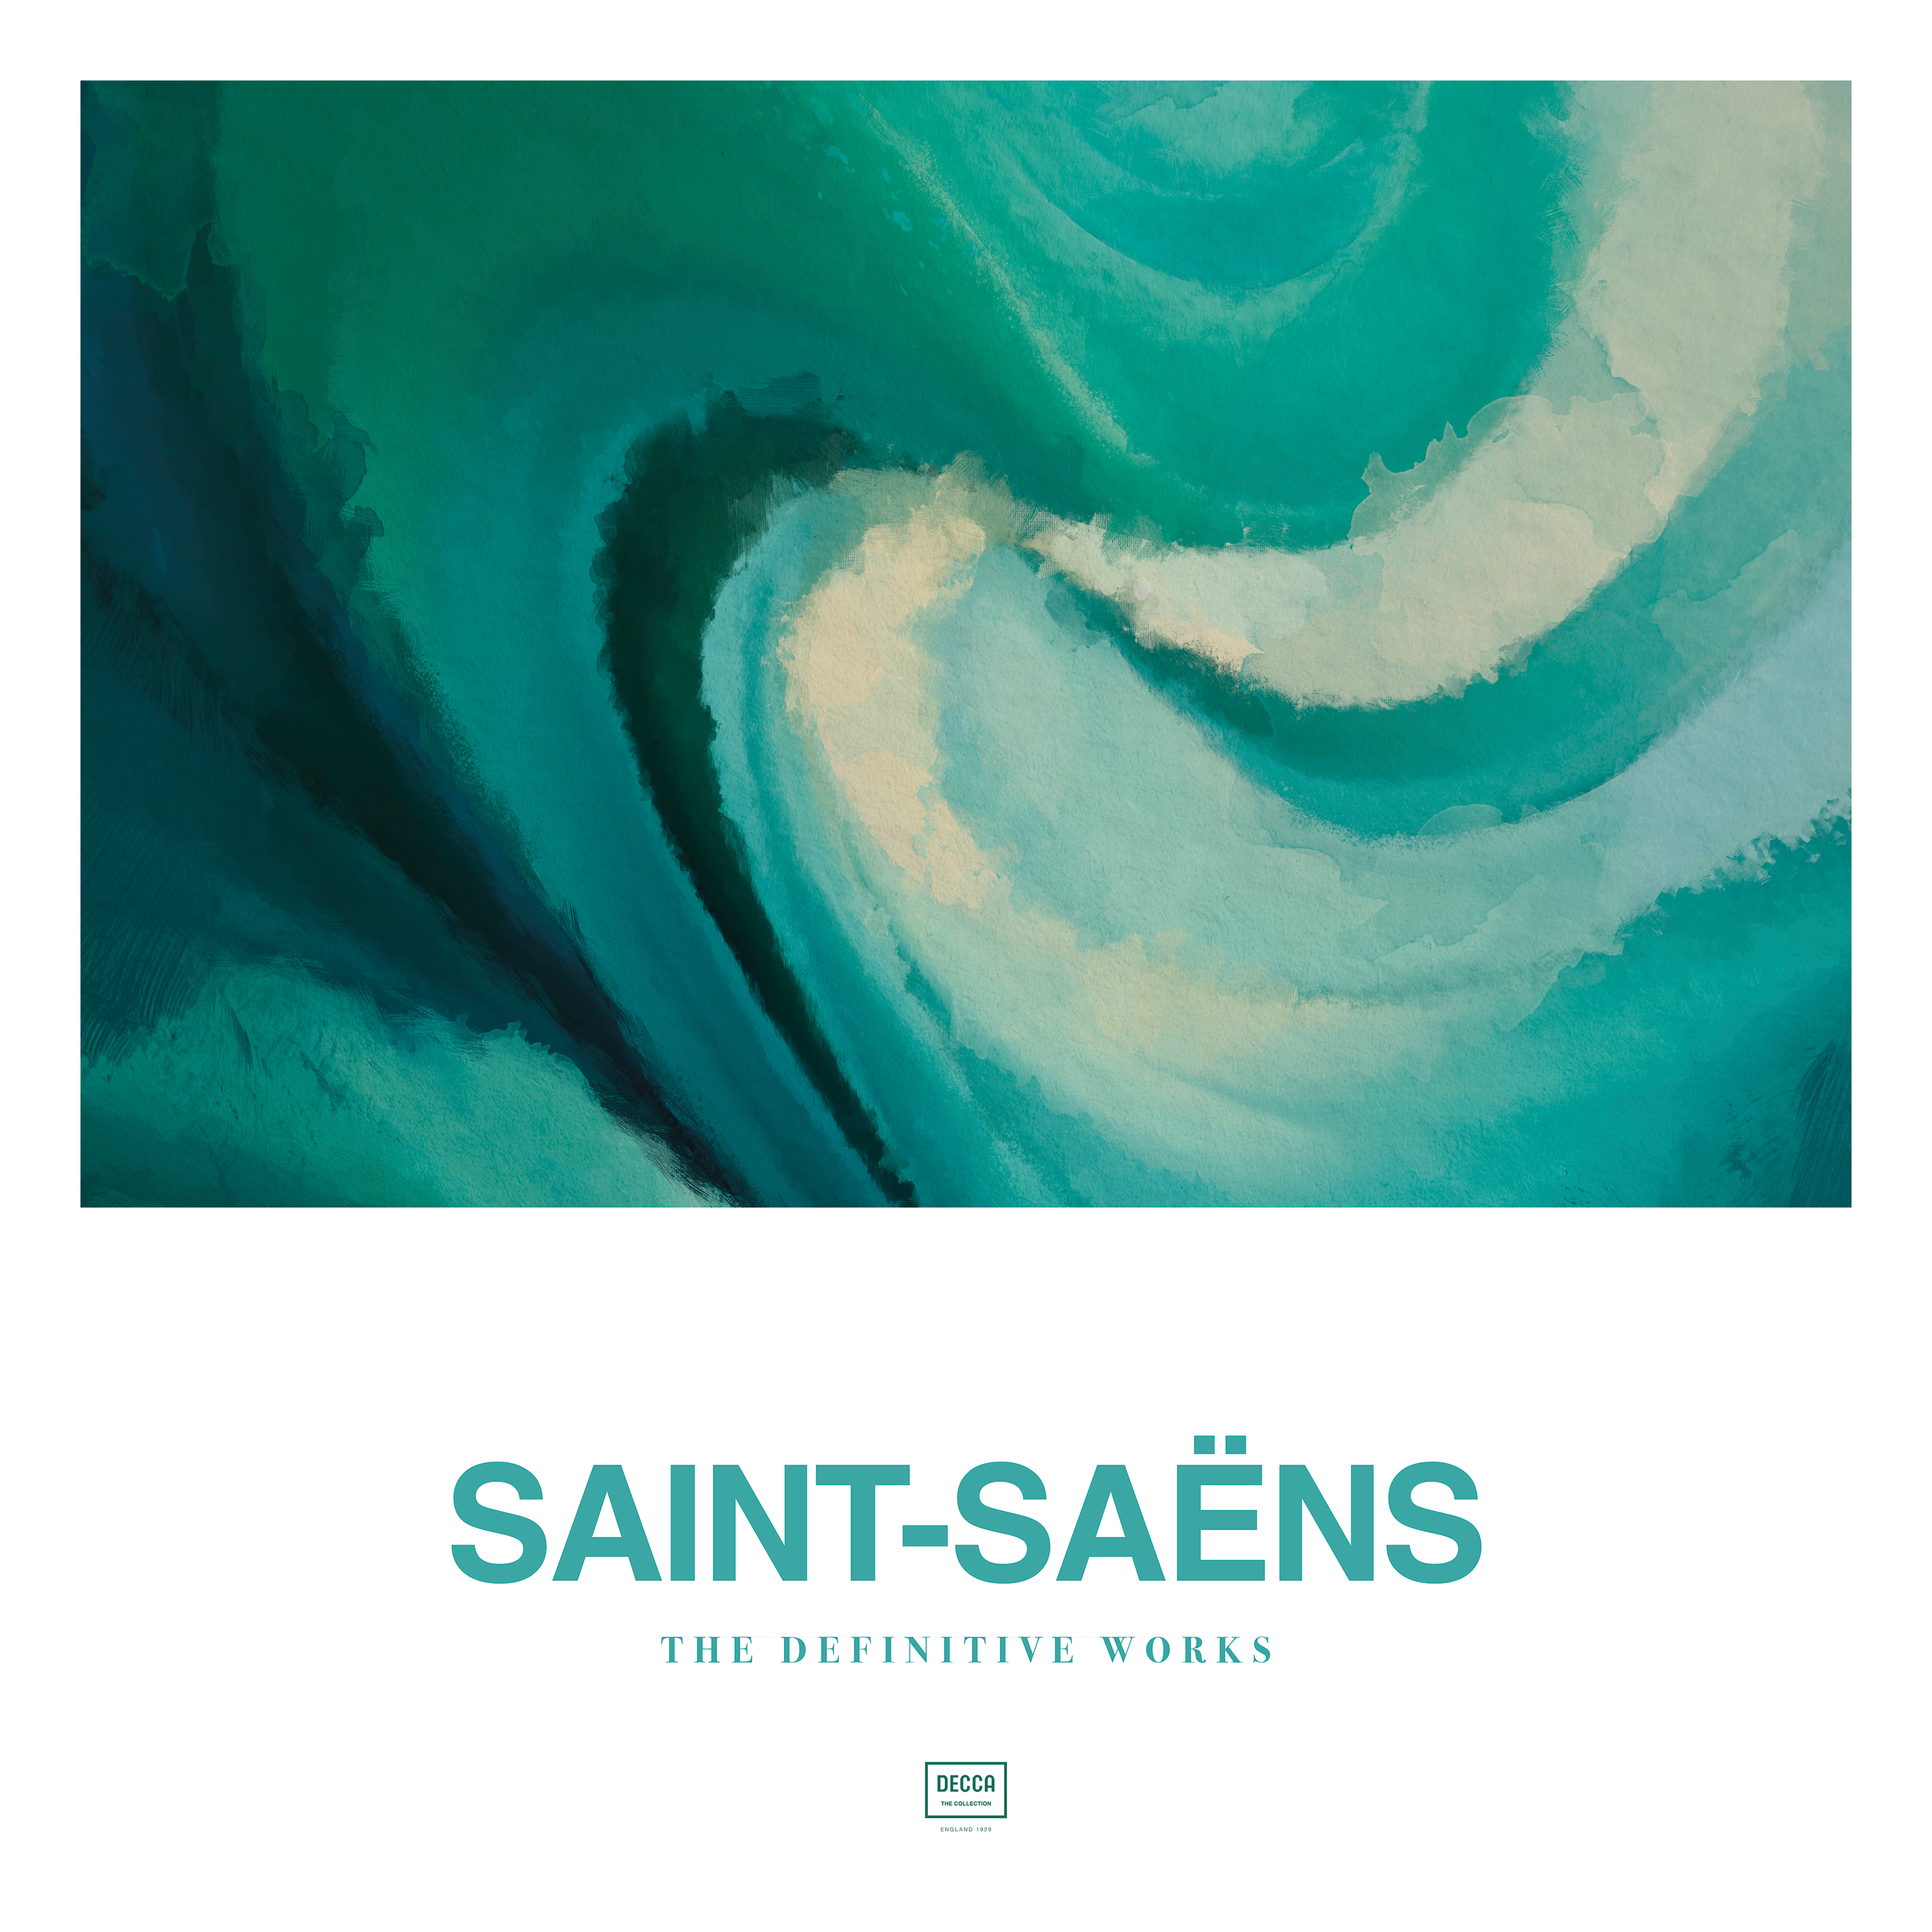 Saint-Saëns - Saint-Saëns – The Definitive Works (Decca - The Collection): Vinyl LP